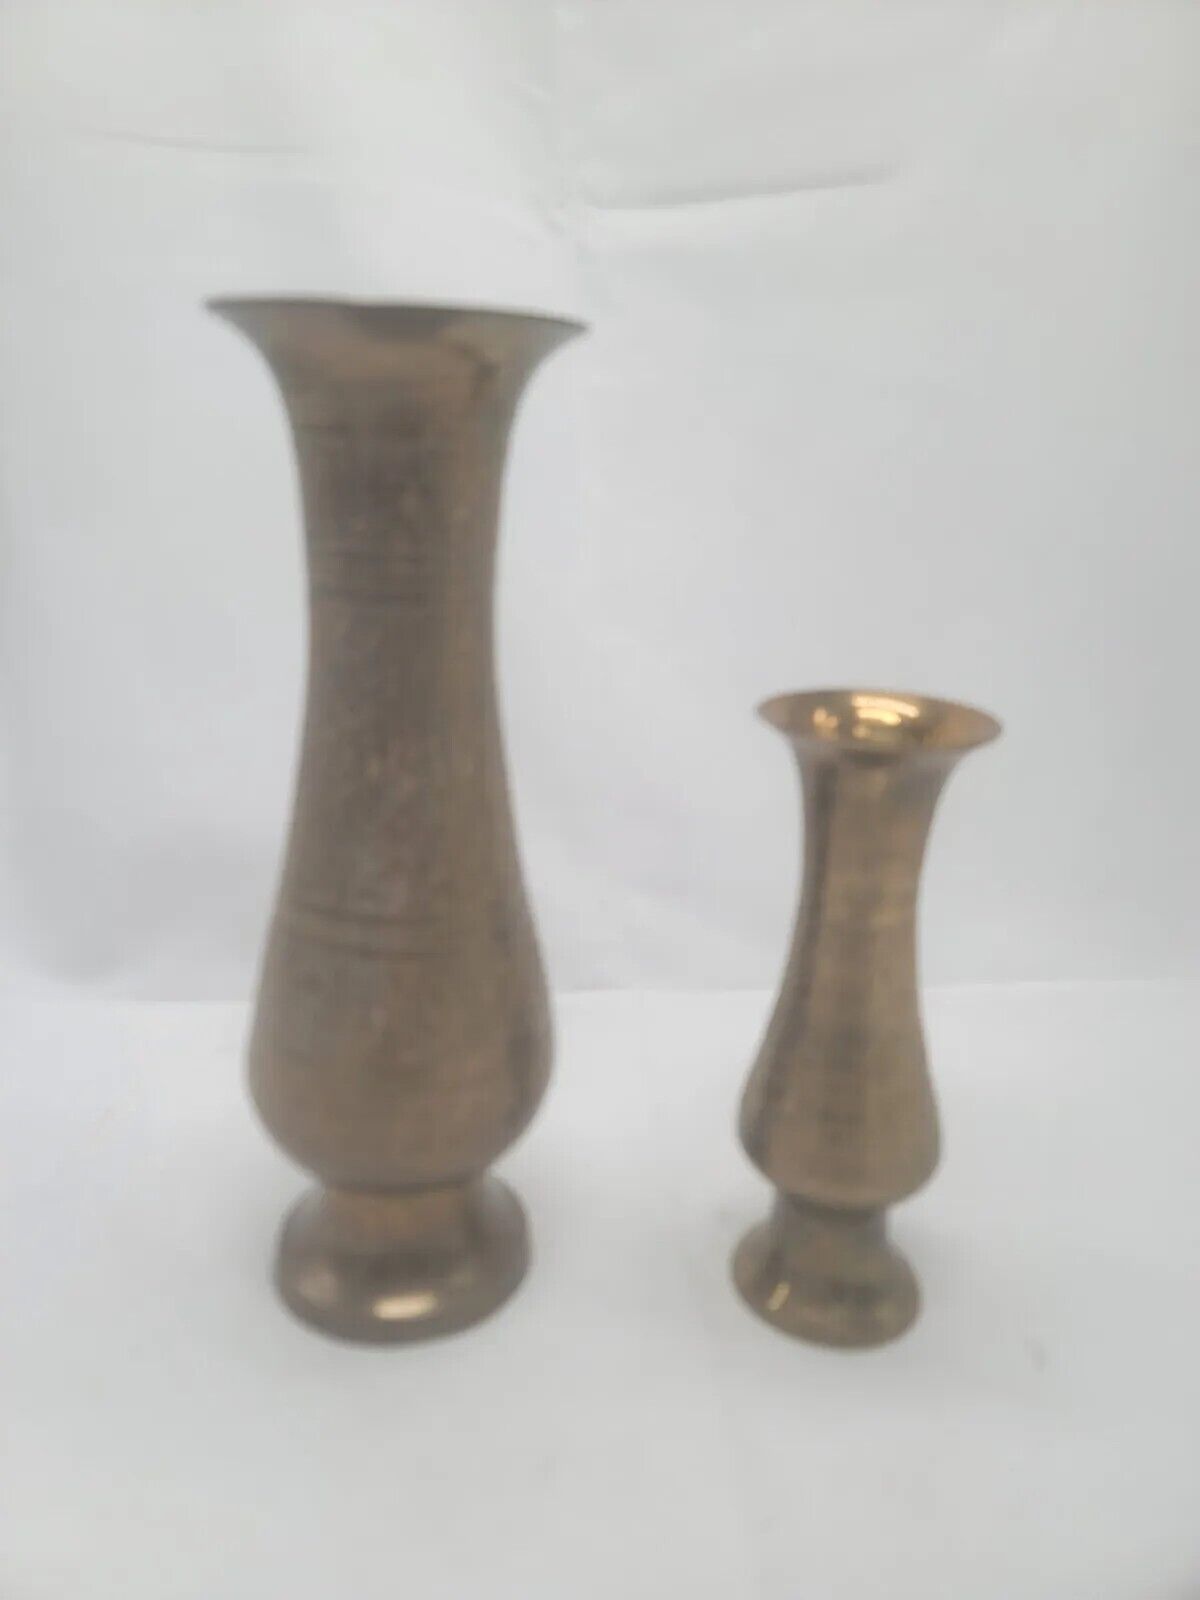 Solid Brass Vases Floral Etched Vintage Made in India Set of 2 Boho Decor